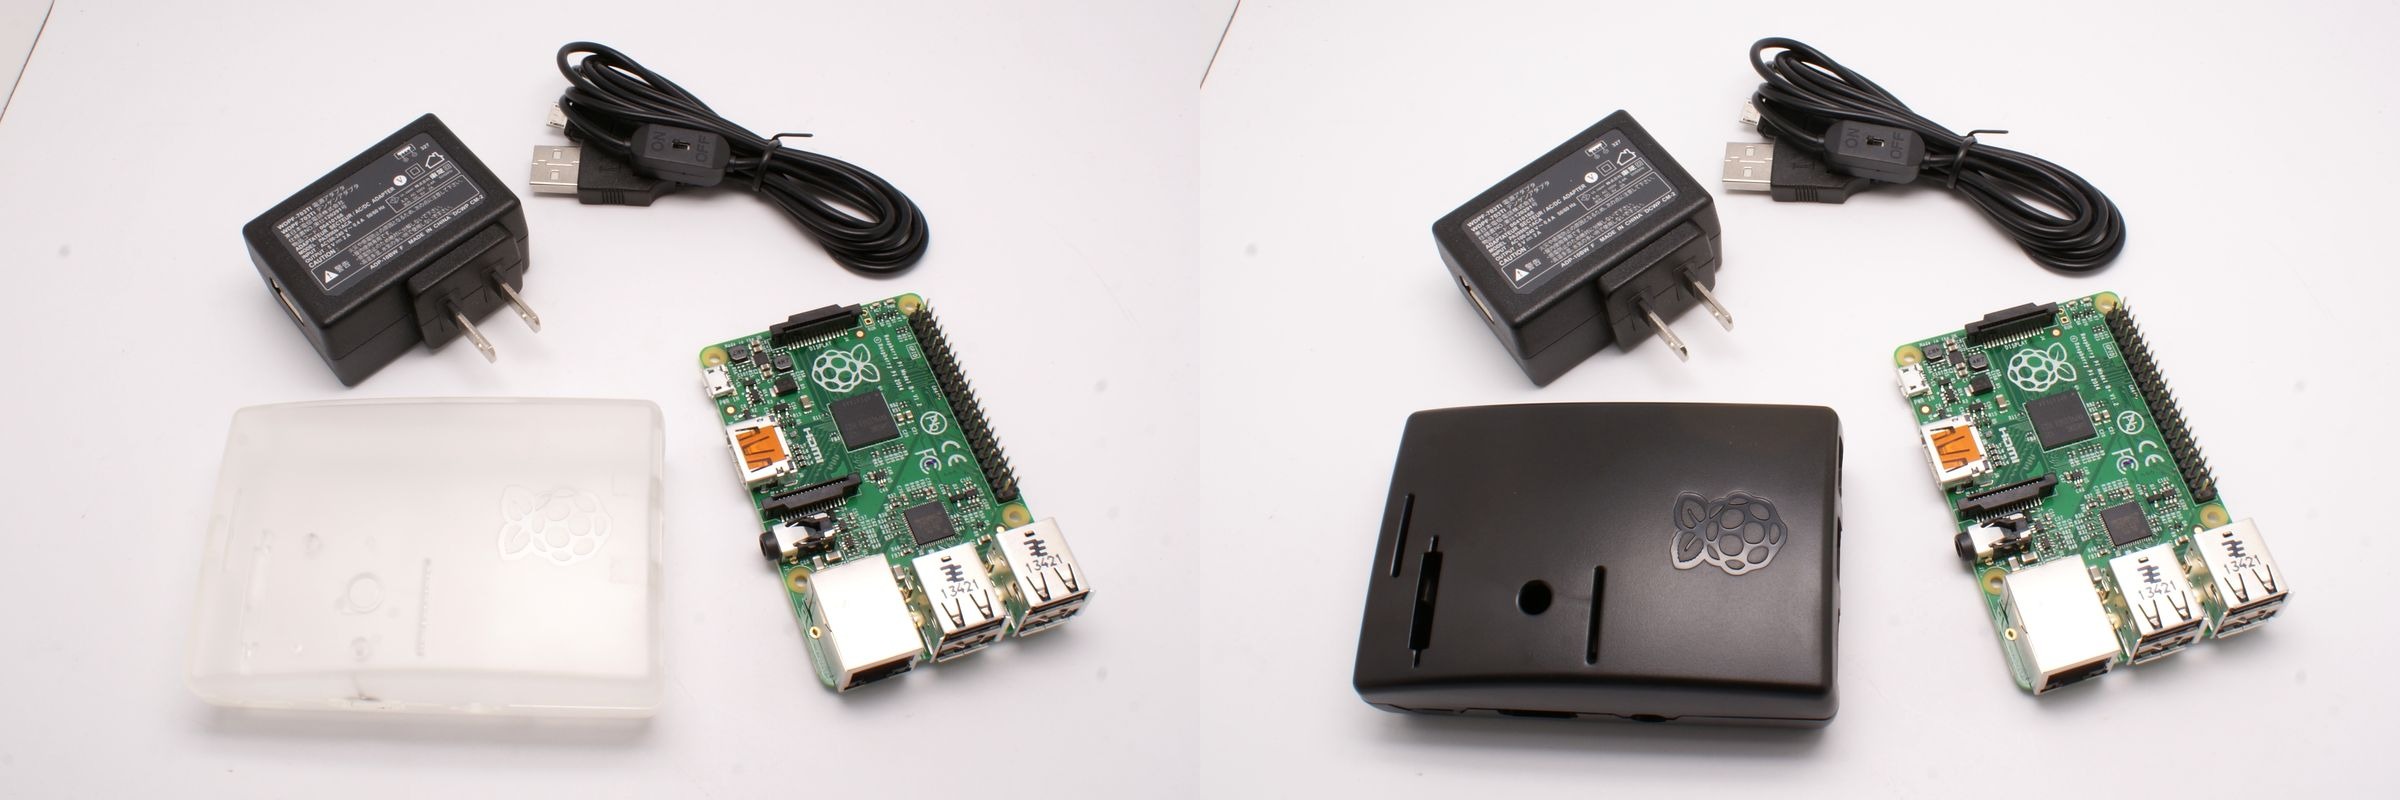 Raspberry Pi Model B+ 電源 SD 套件